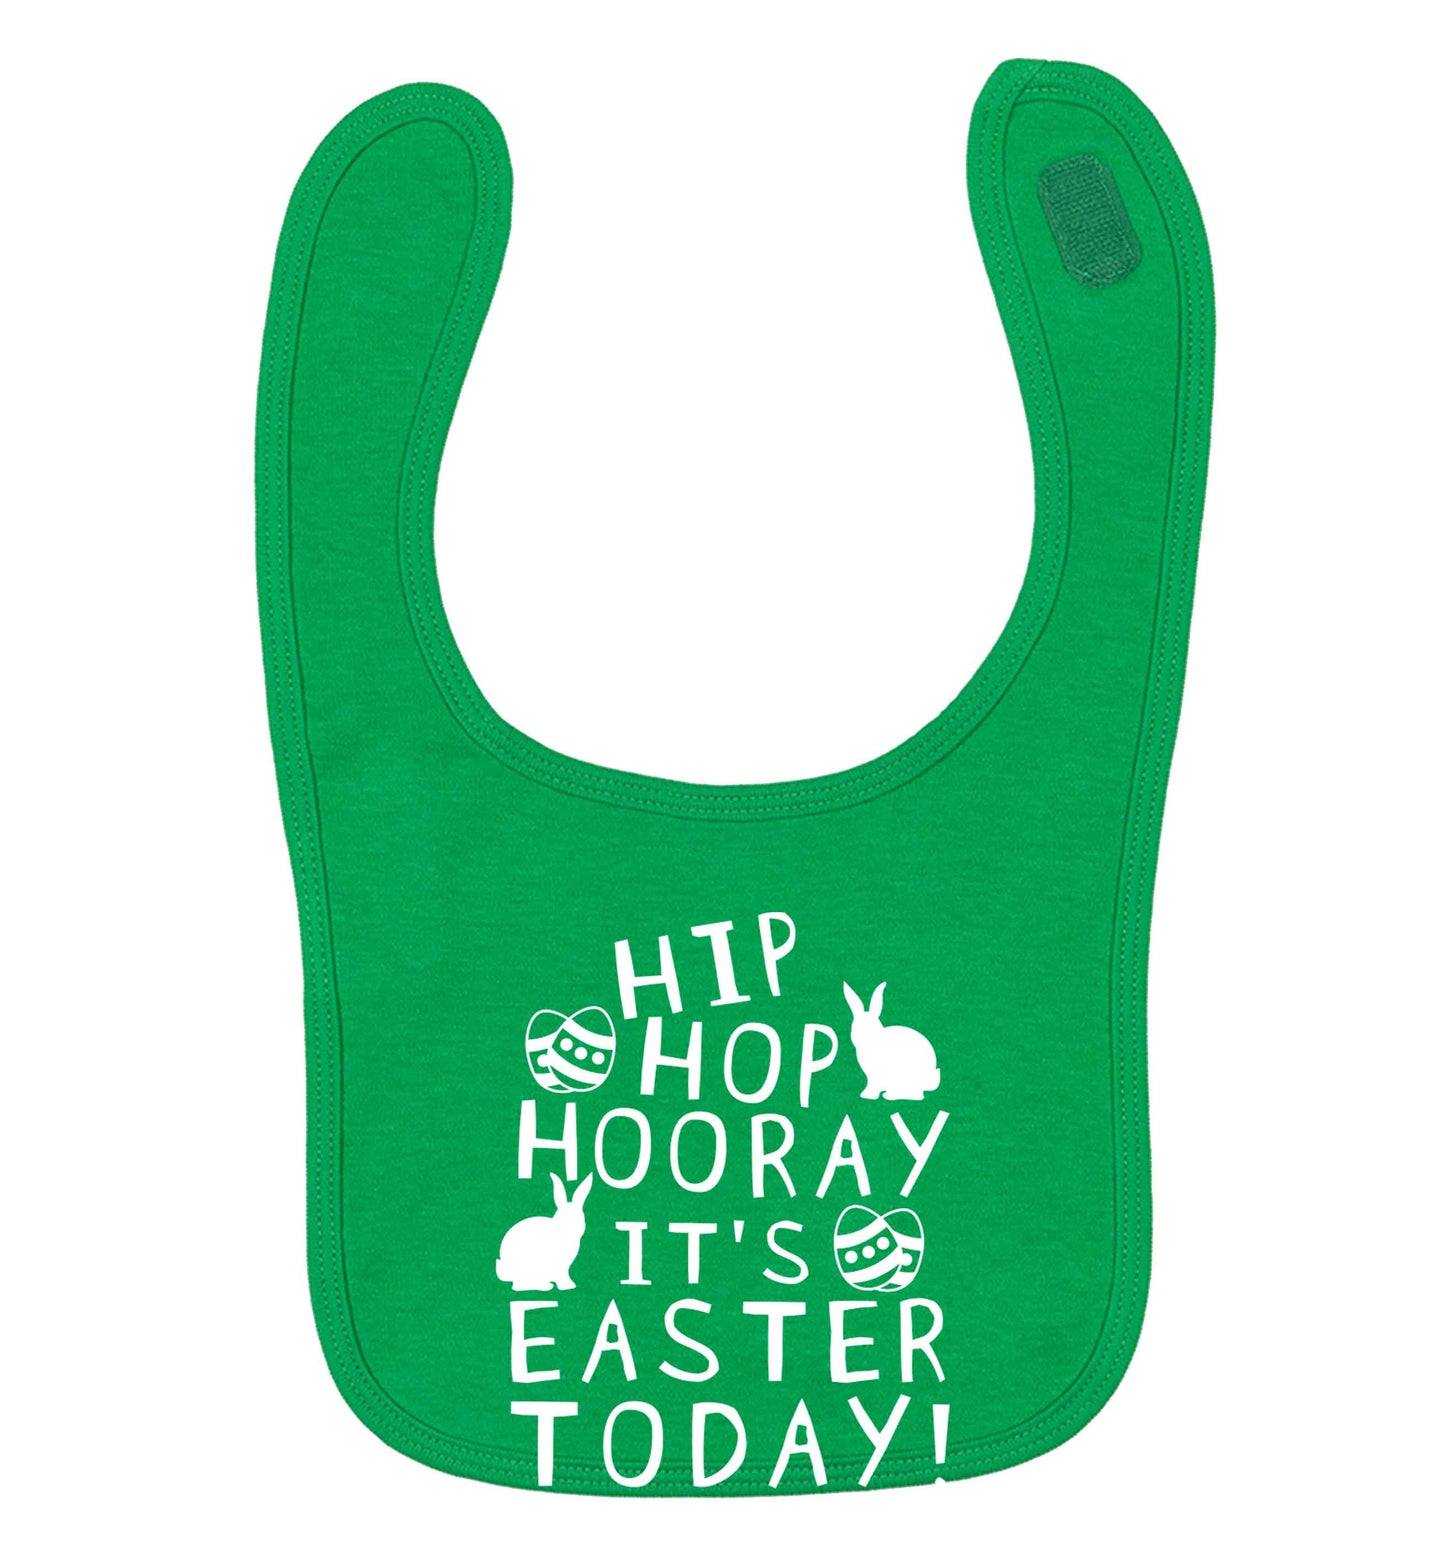 Hip hip hooray it's Easter today! green baby bib